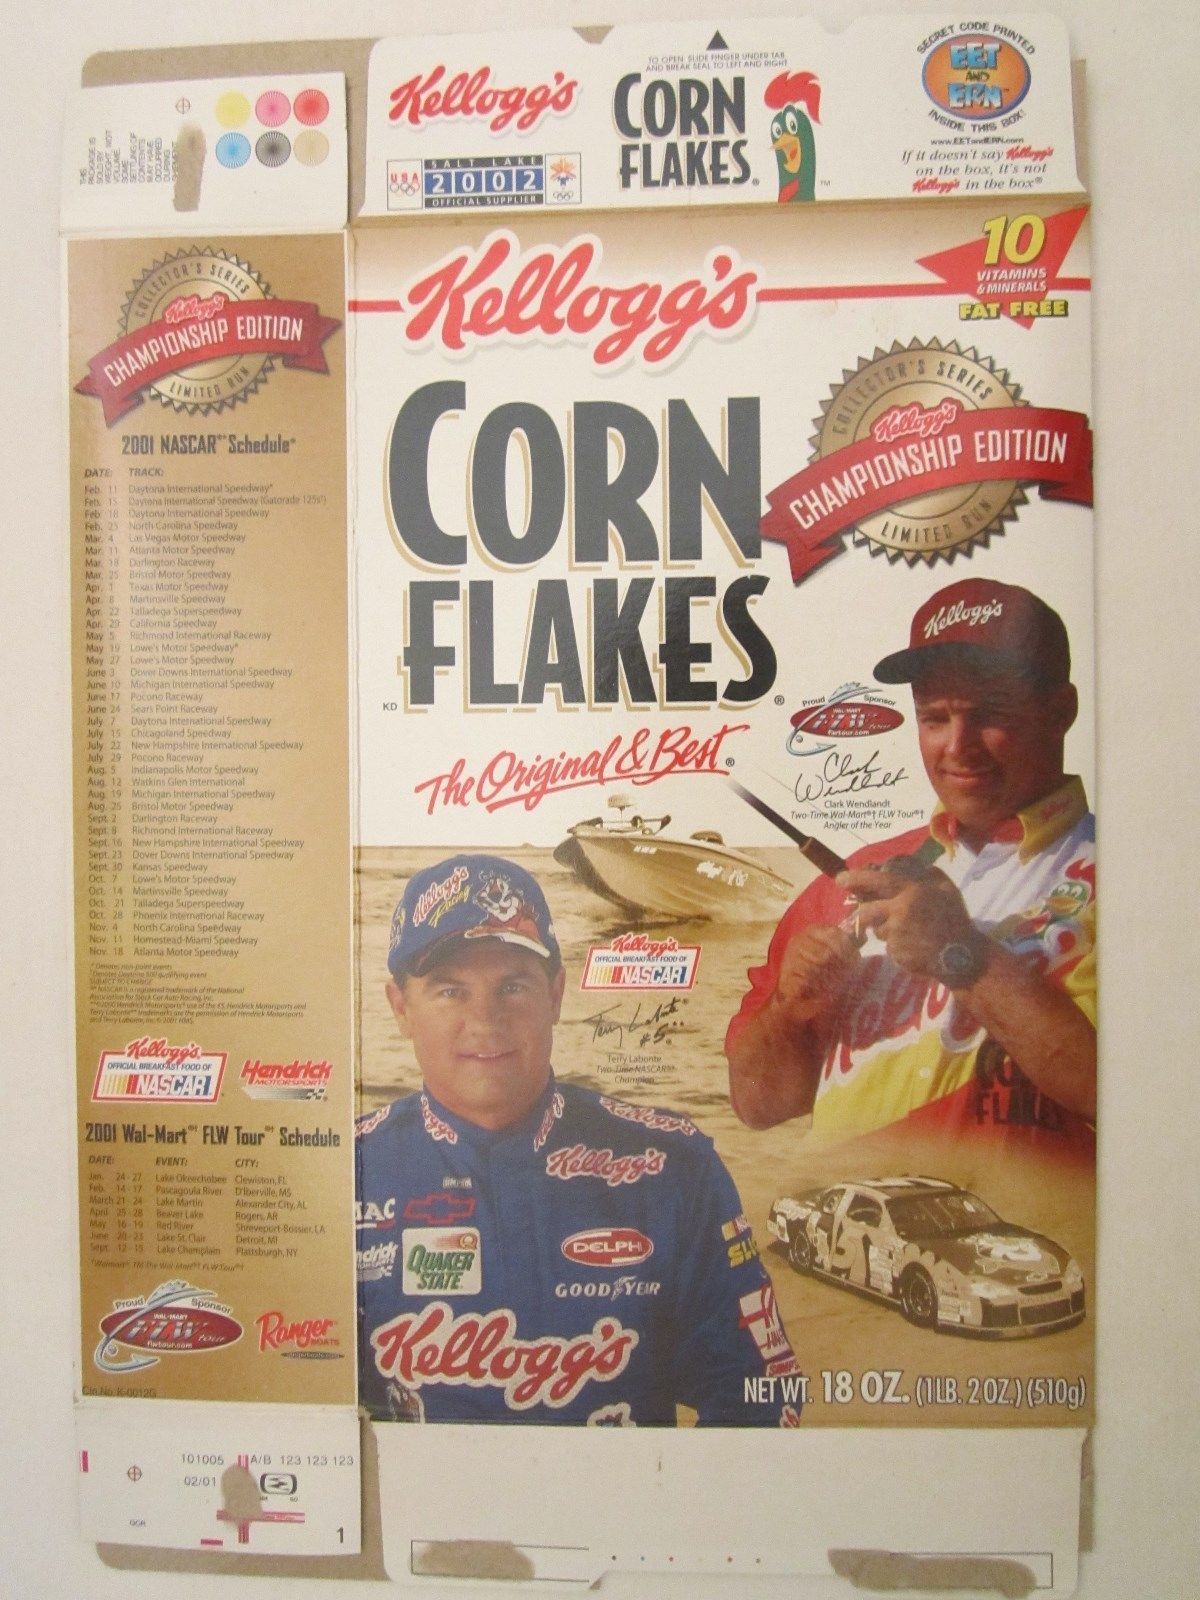 Primary image for Kellogg's Cereal Box 18 oz CORN FLAKES 2001 Clark Wendlandt CHAMPIONSHIP Labonte